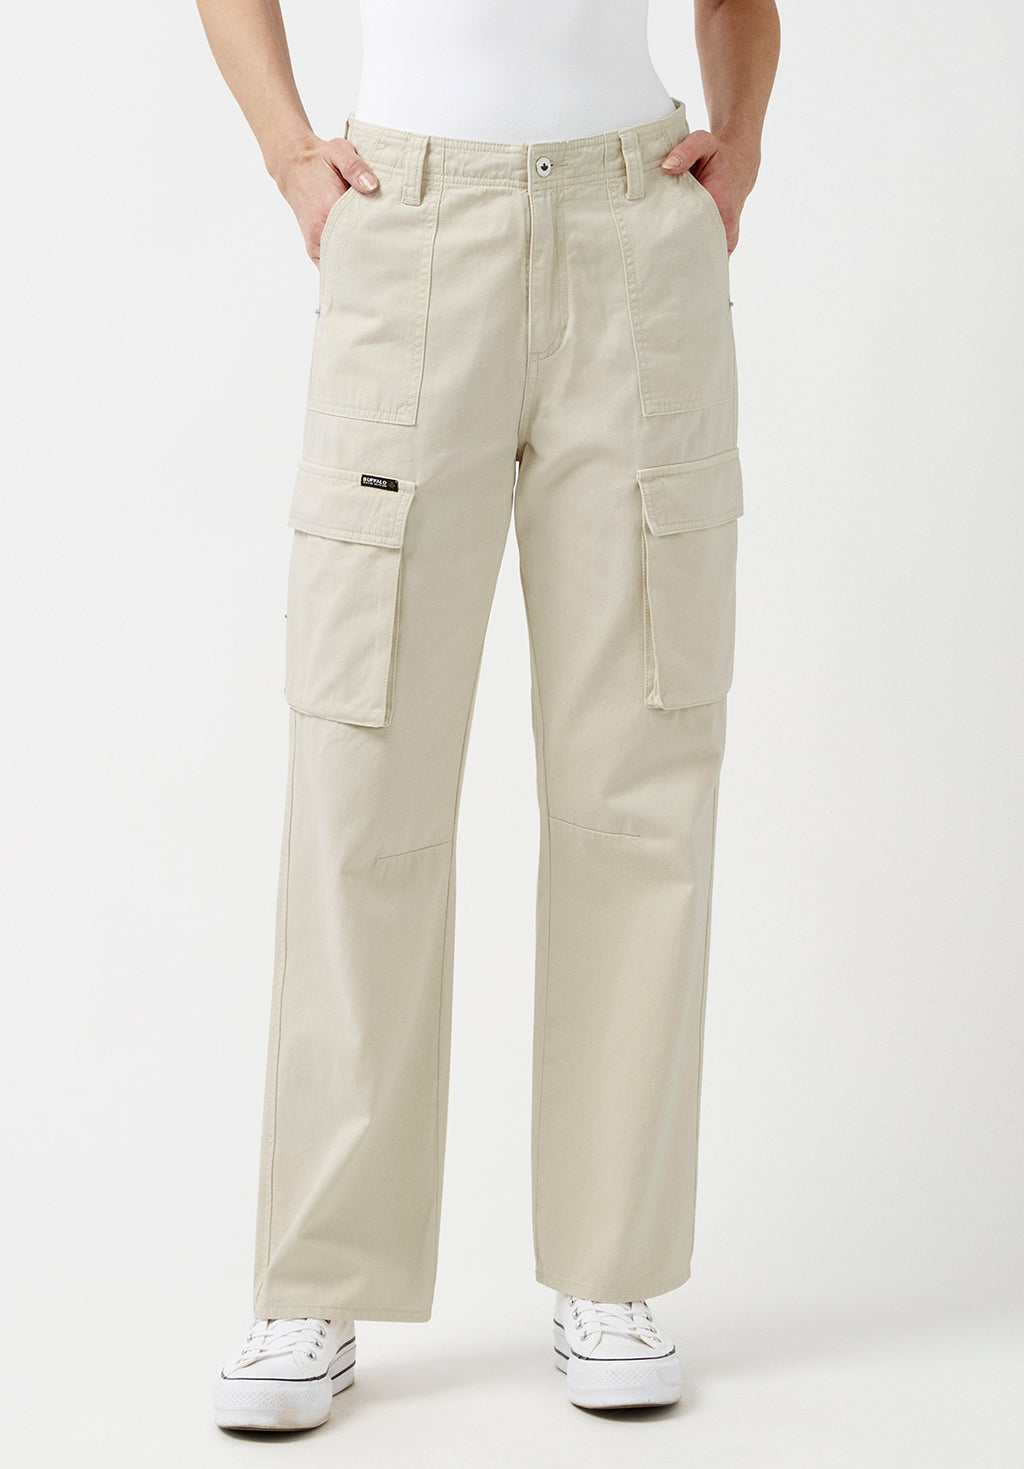 Mens Cargo Pant - Shop Cargo Style Jeans for Men